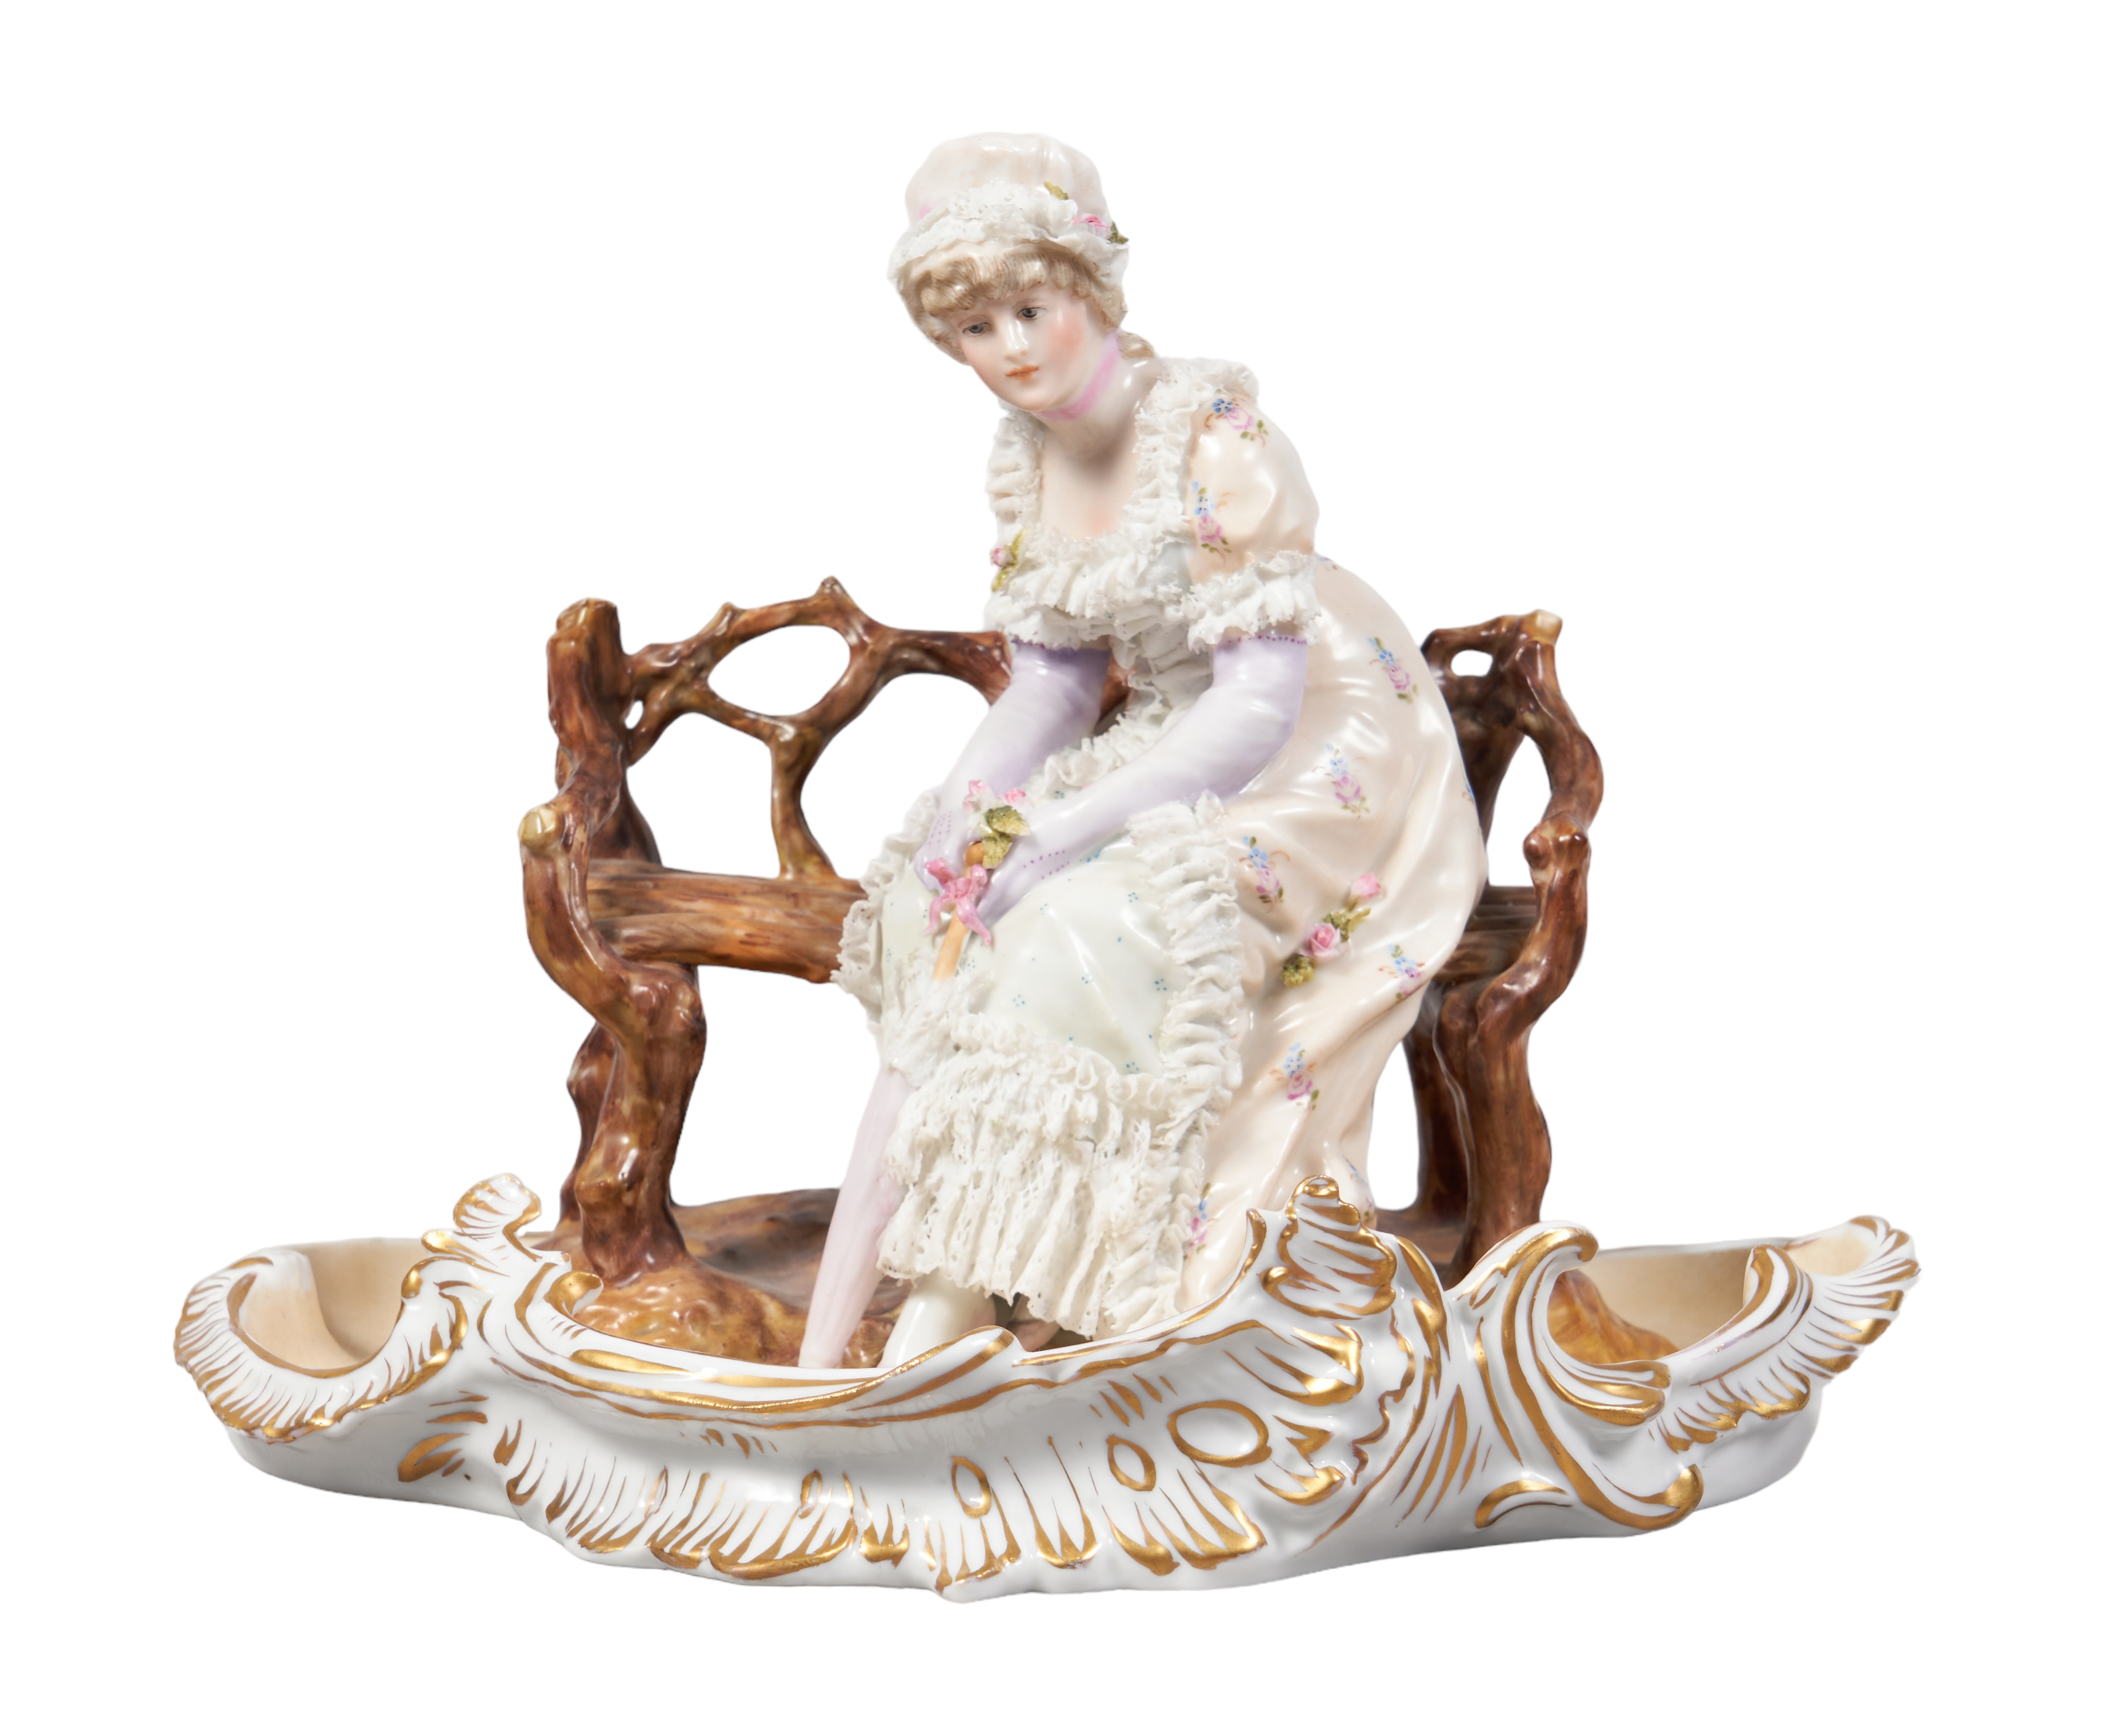 German Porcelain Figure of a Woman 2e2073